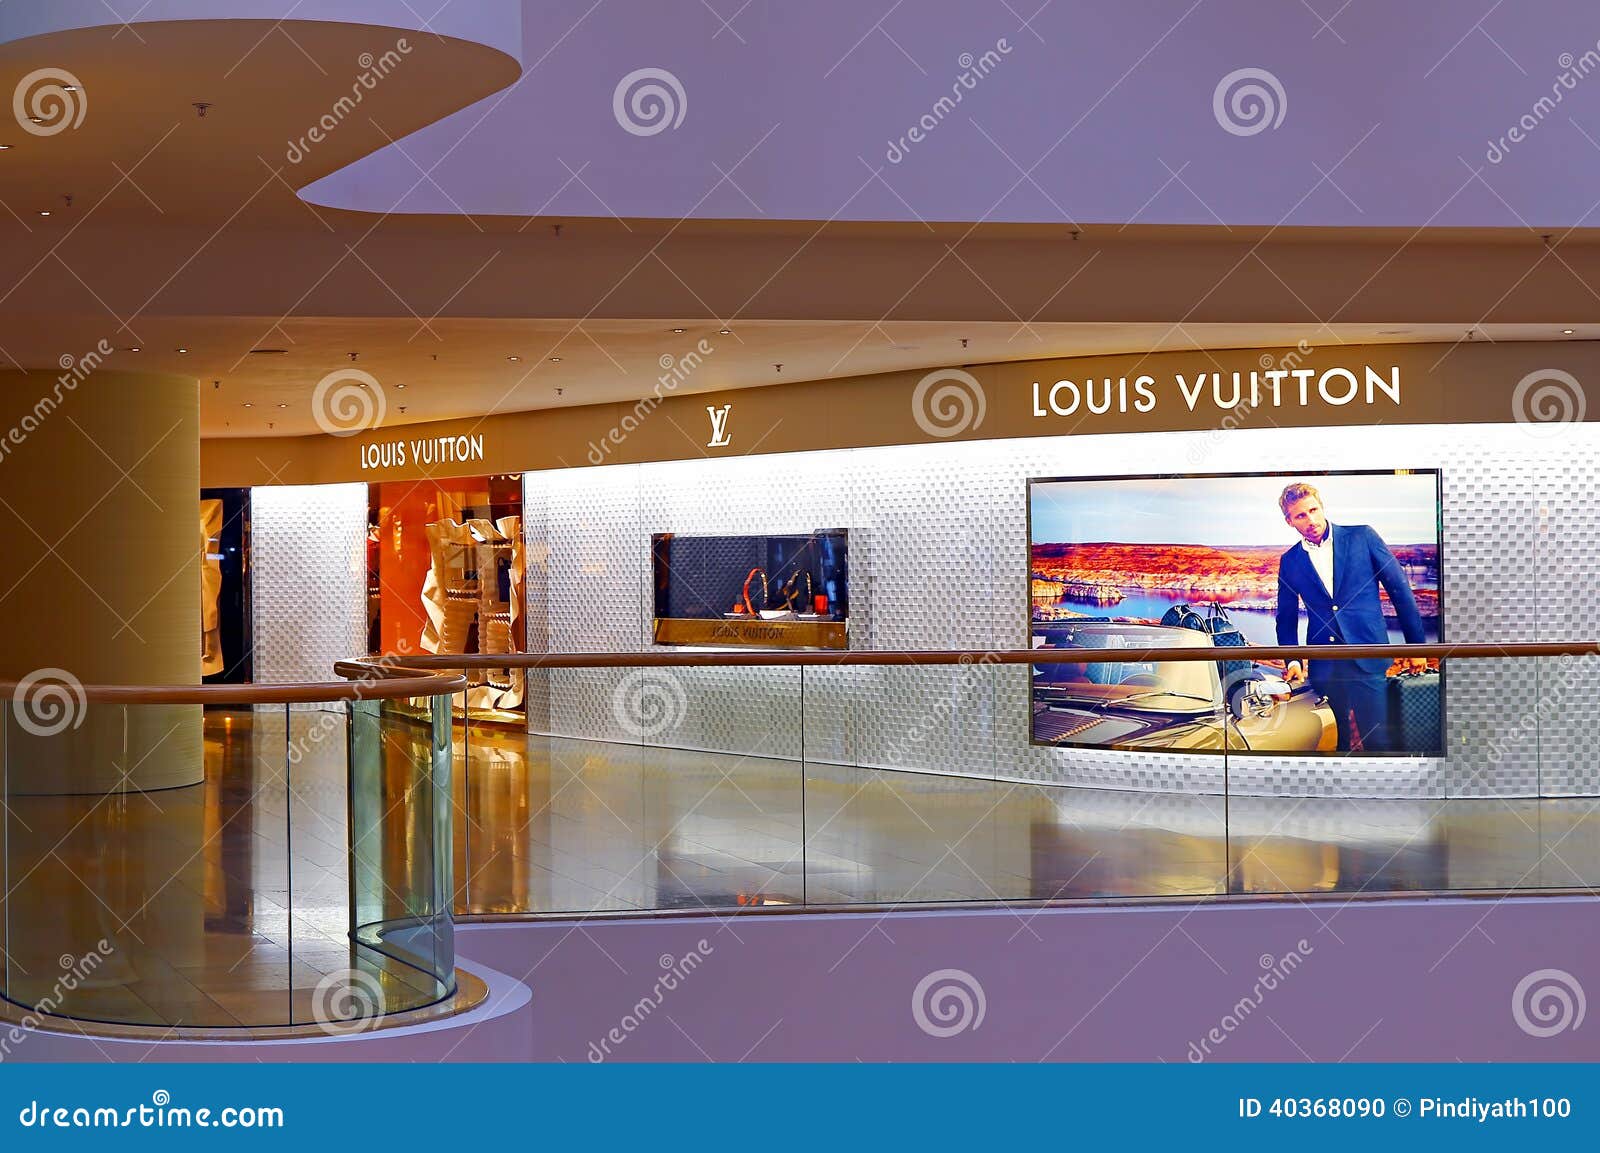 Louis Vuitton Pacific Mall  Pacific place, Luxury retail, Louis vuitton